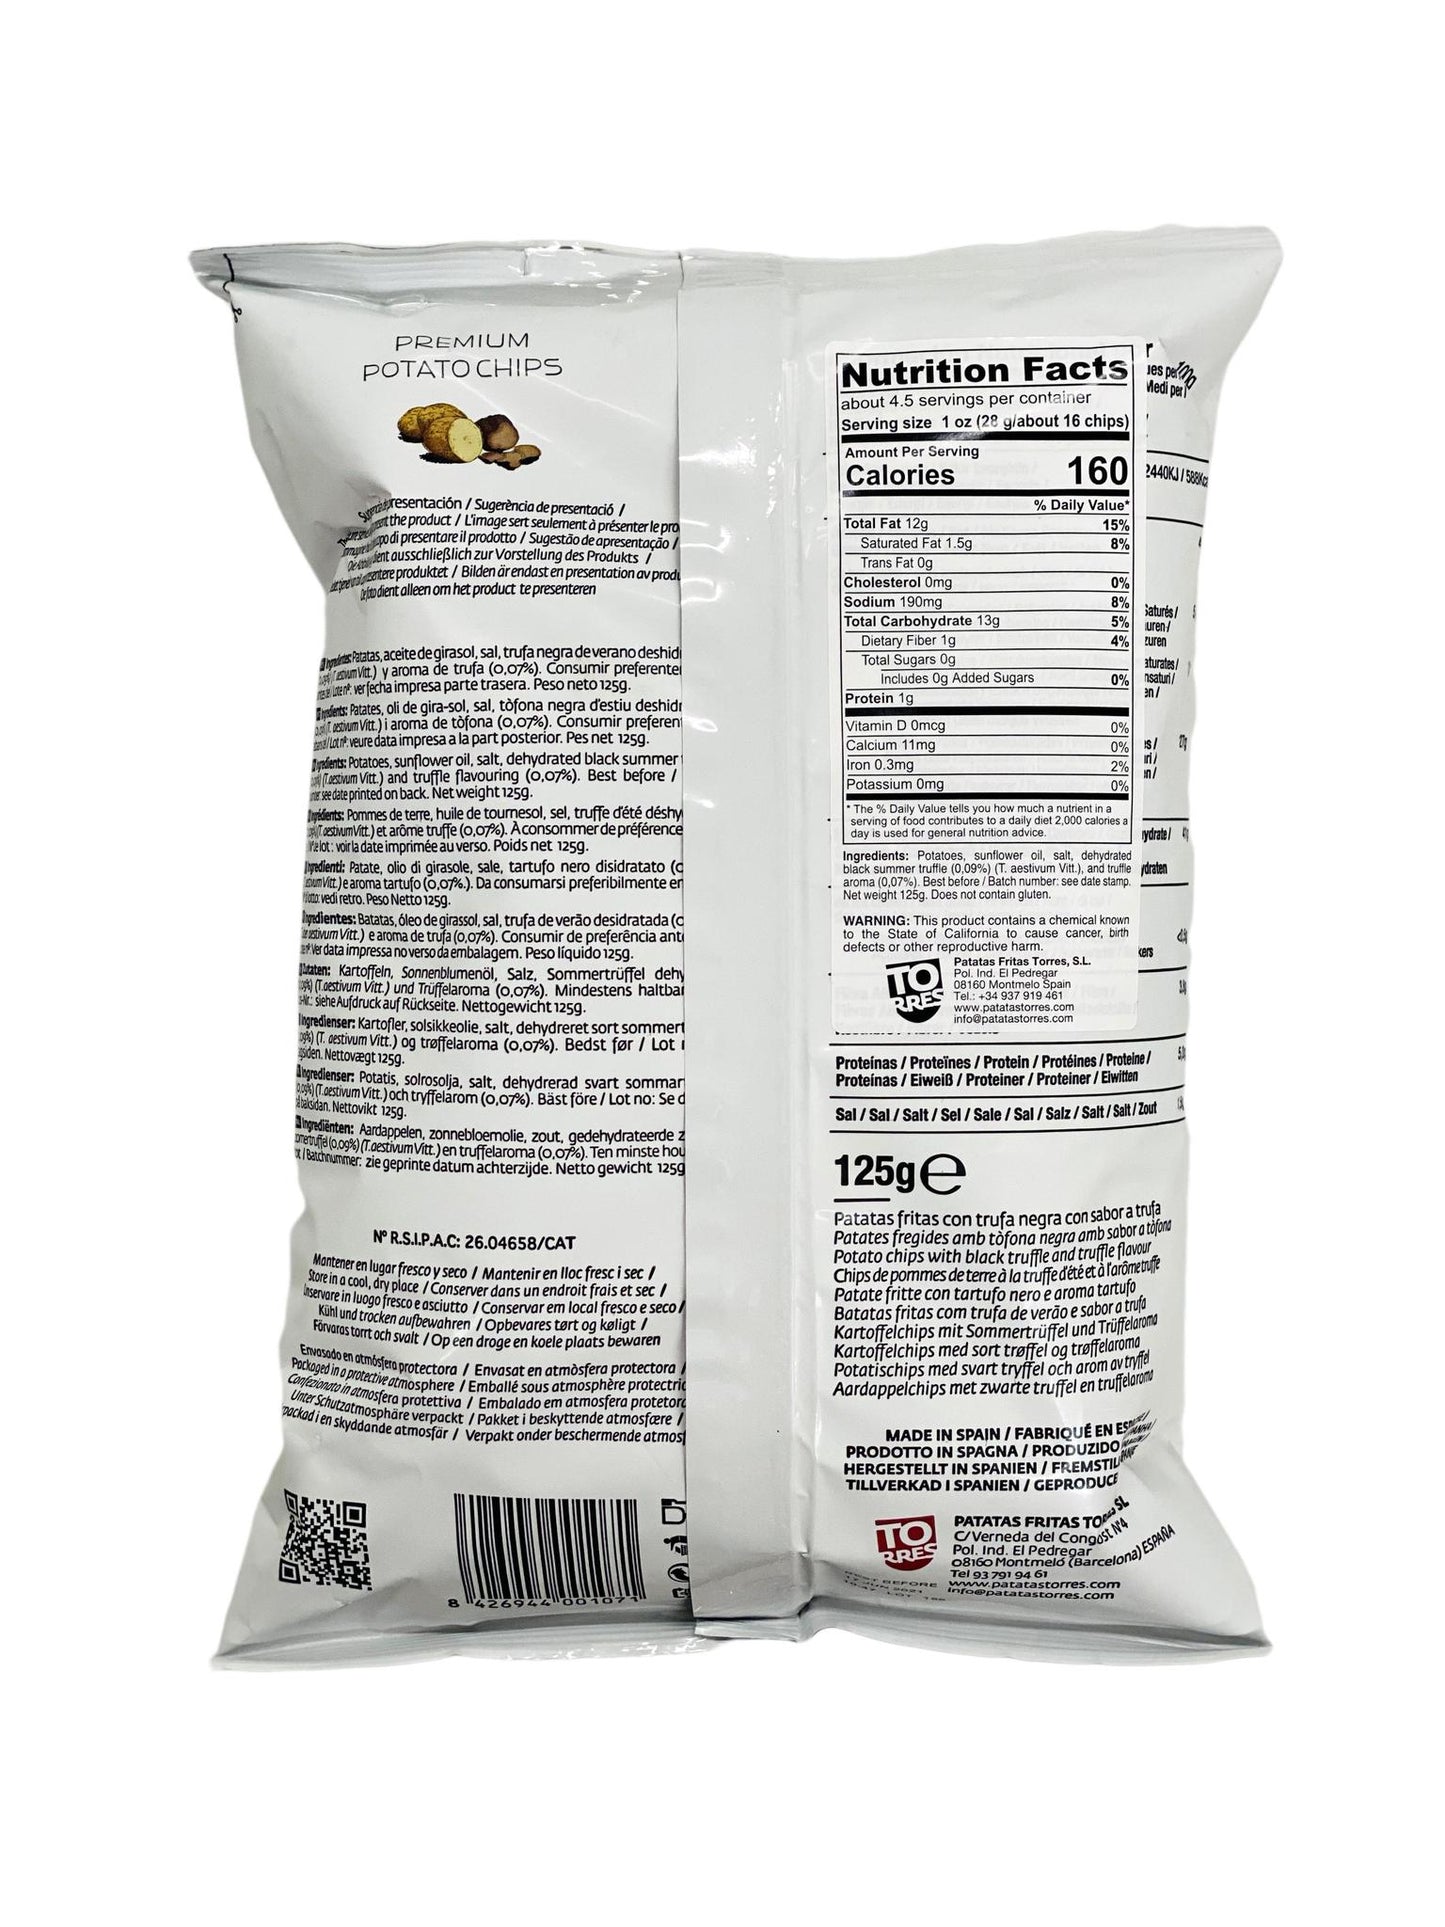 Torres Selecta Potato Chips Black Truffle, 4.41 oz